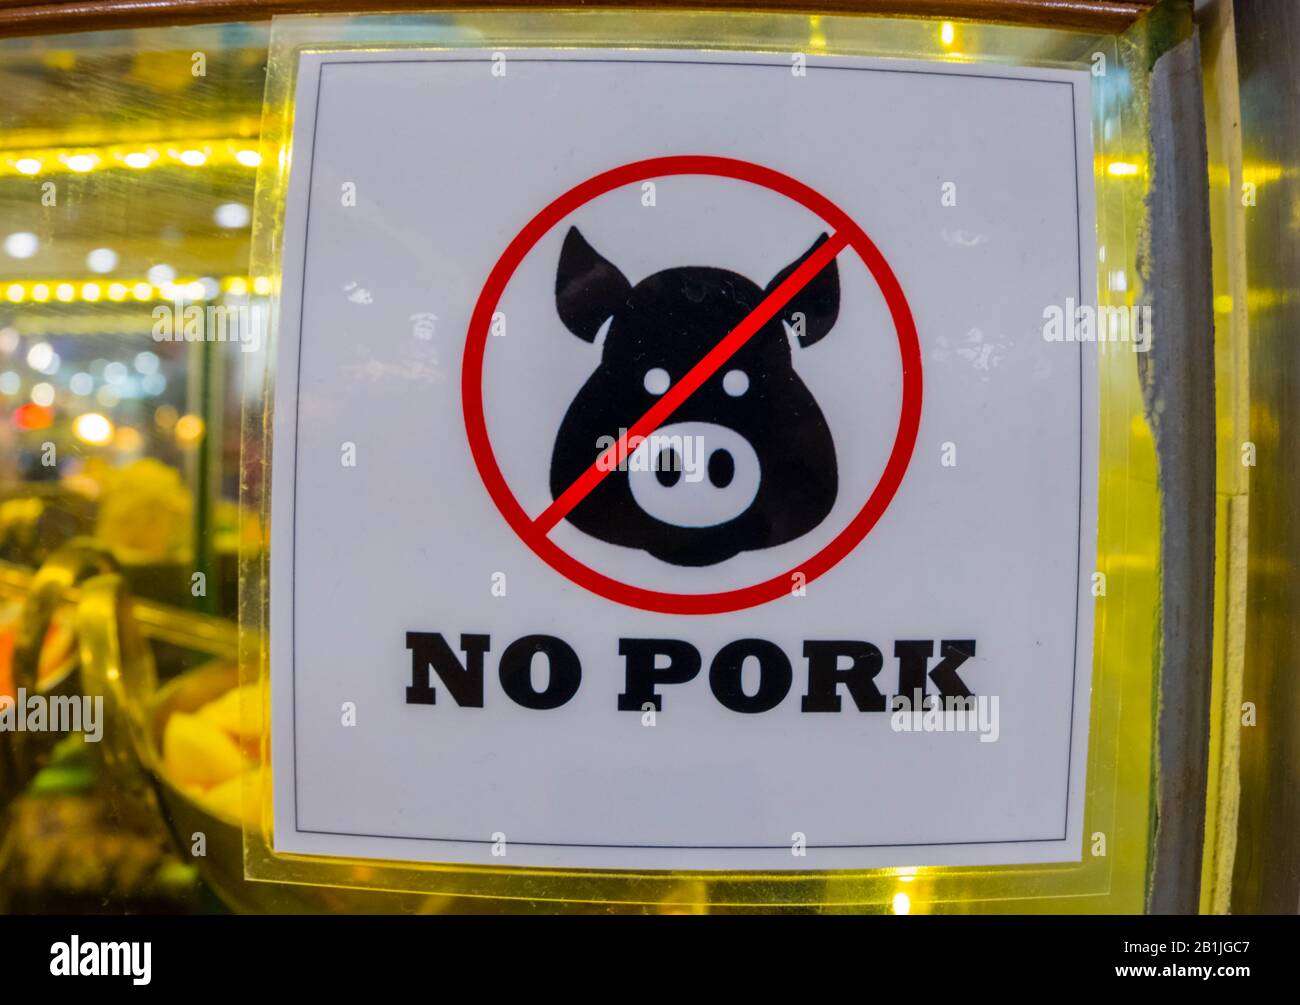 Restaurant not serving pork, Bangkok, Thailand Stock Photo